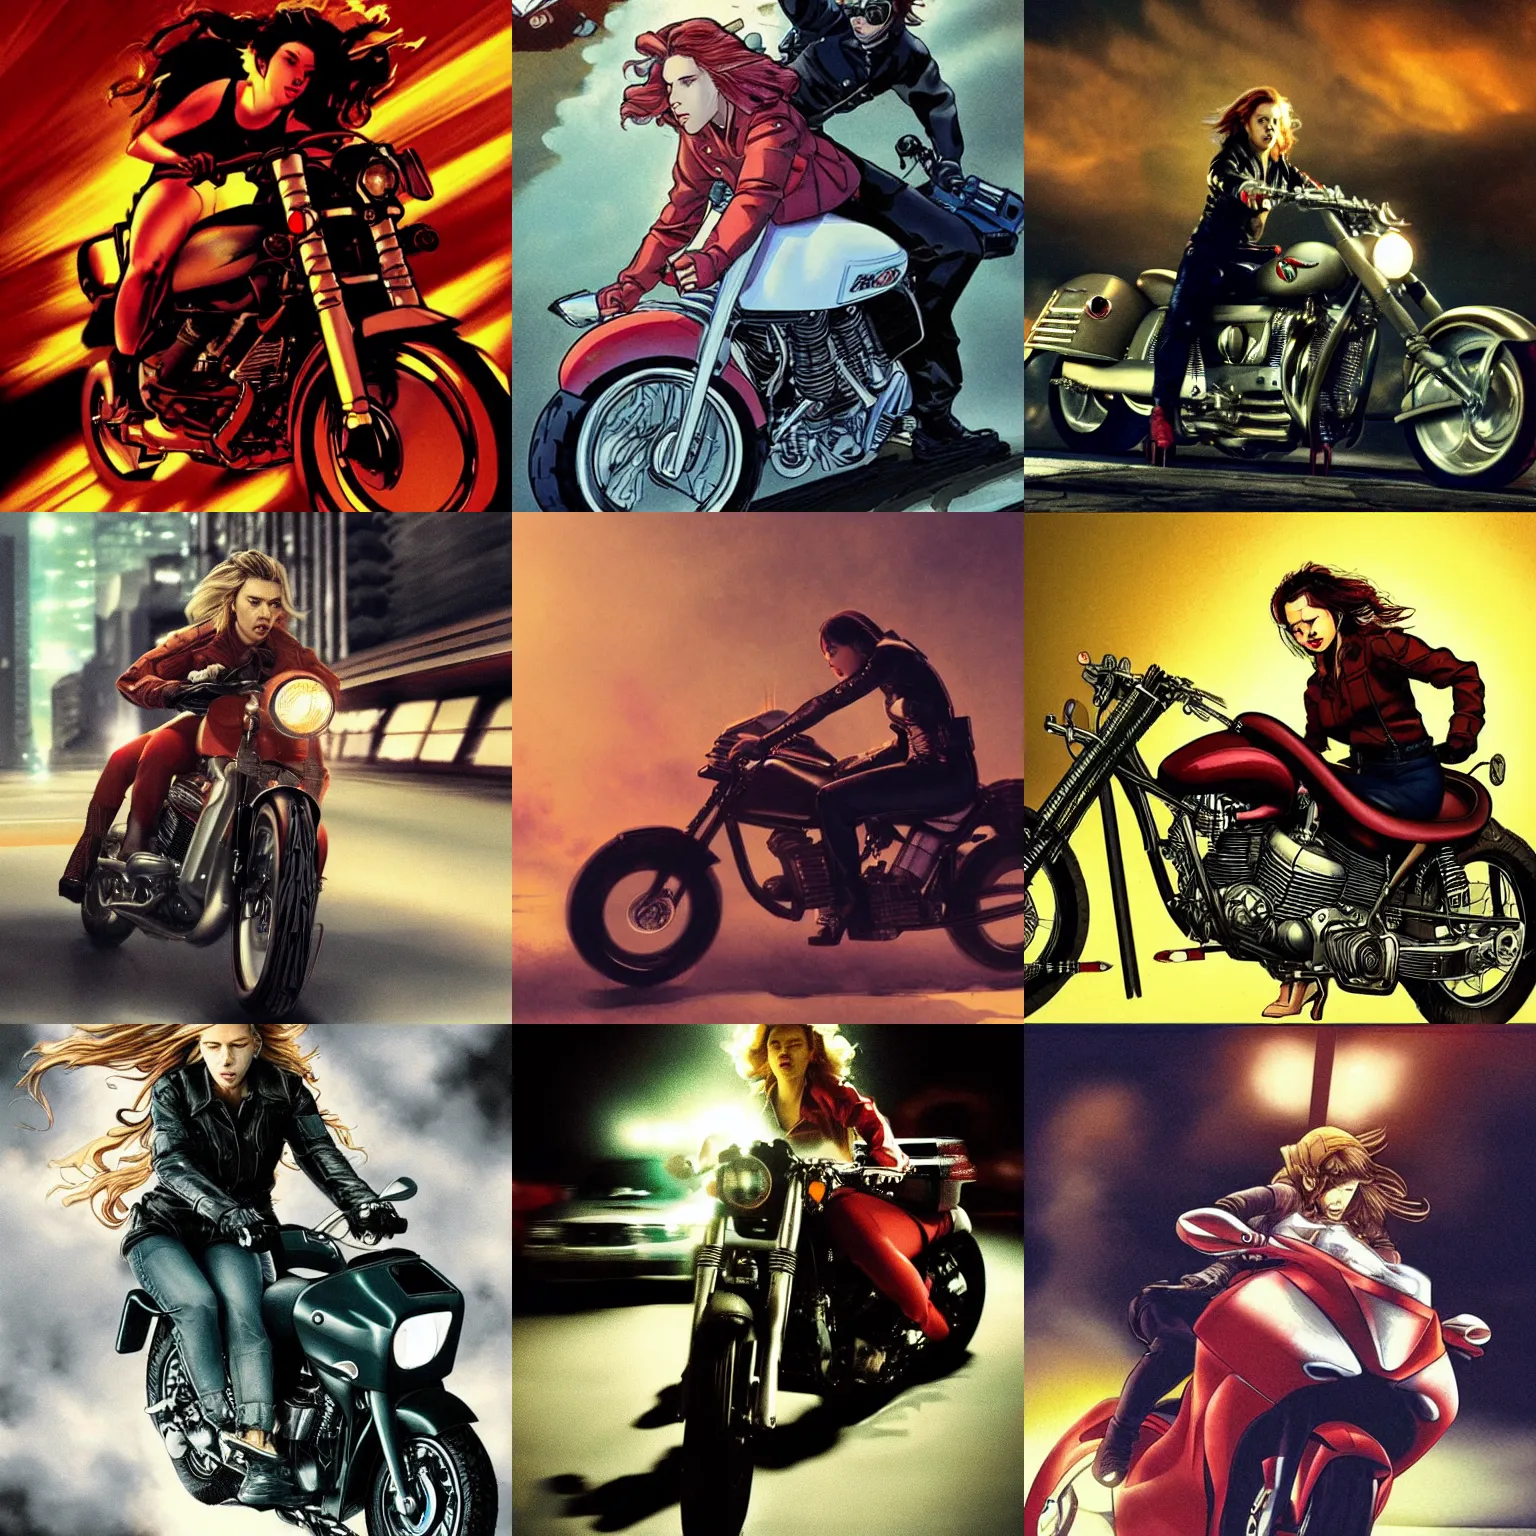 Prompt: angry scarlett johansson riding motorbike, katsuhiro otomo, dramatic lighting,